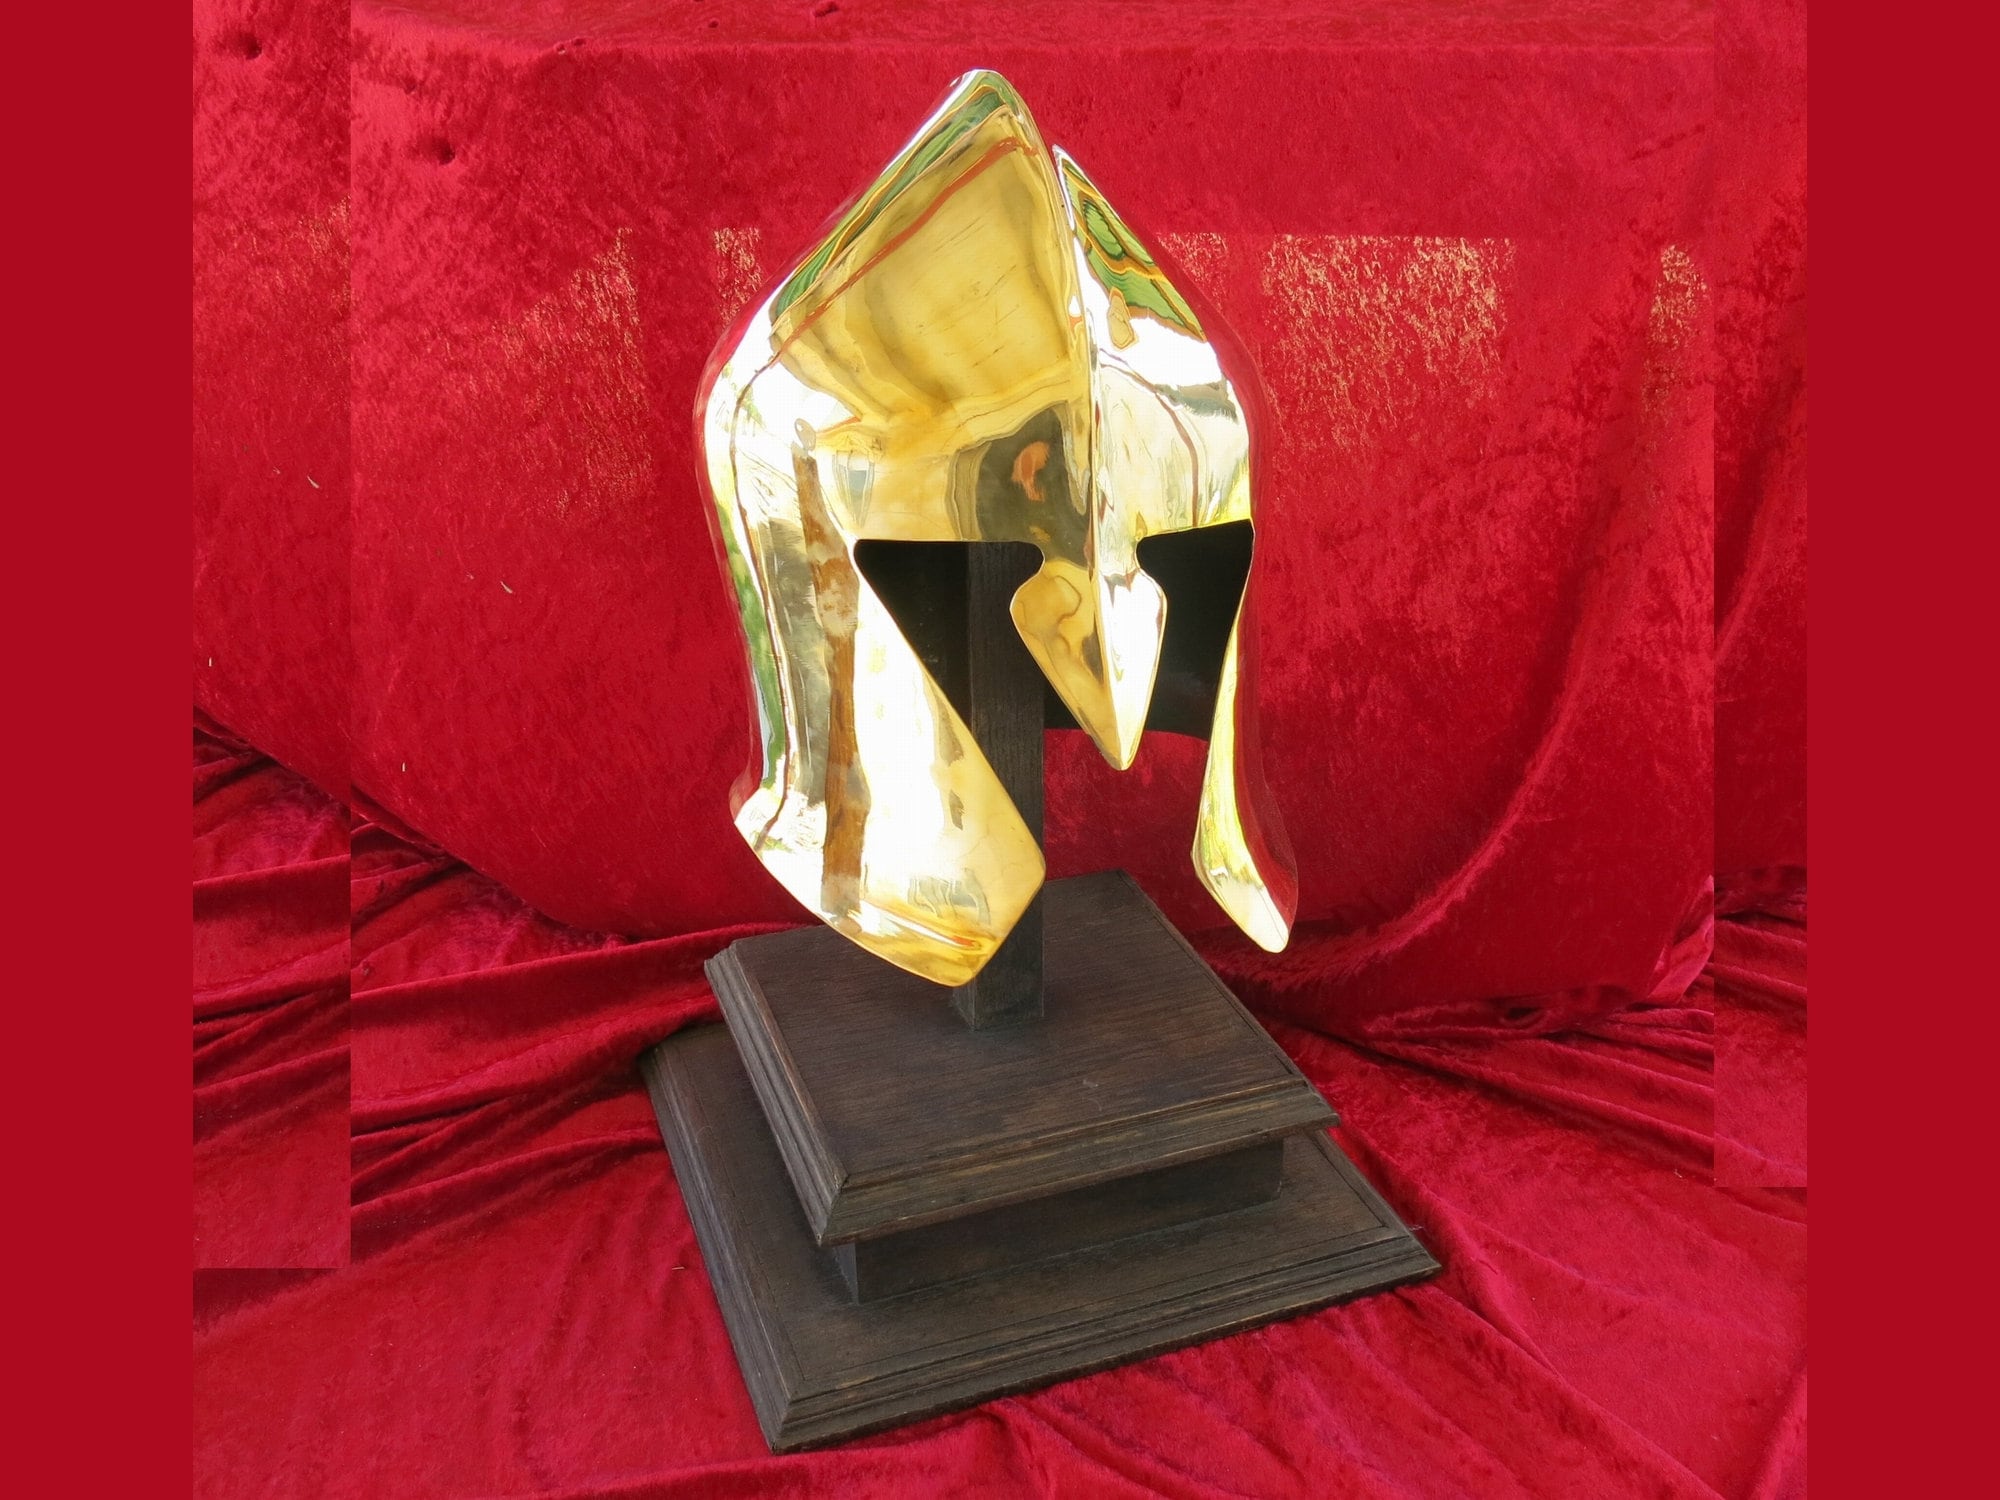 Golden Knights' chrome gold helmets receive mixed reviews, Golden Knights